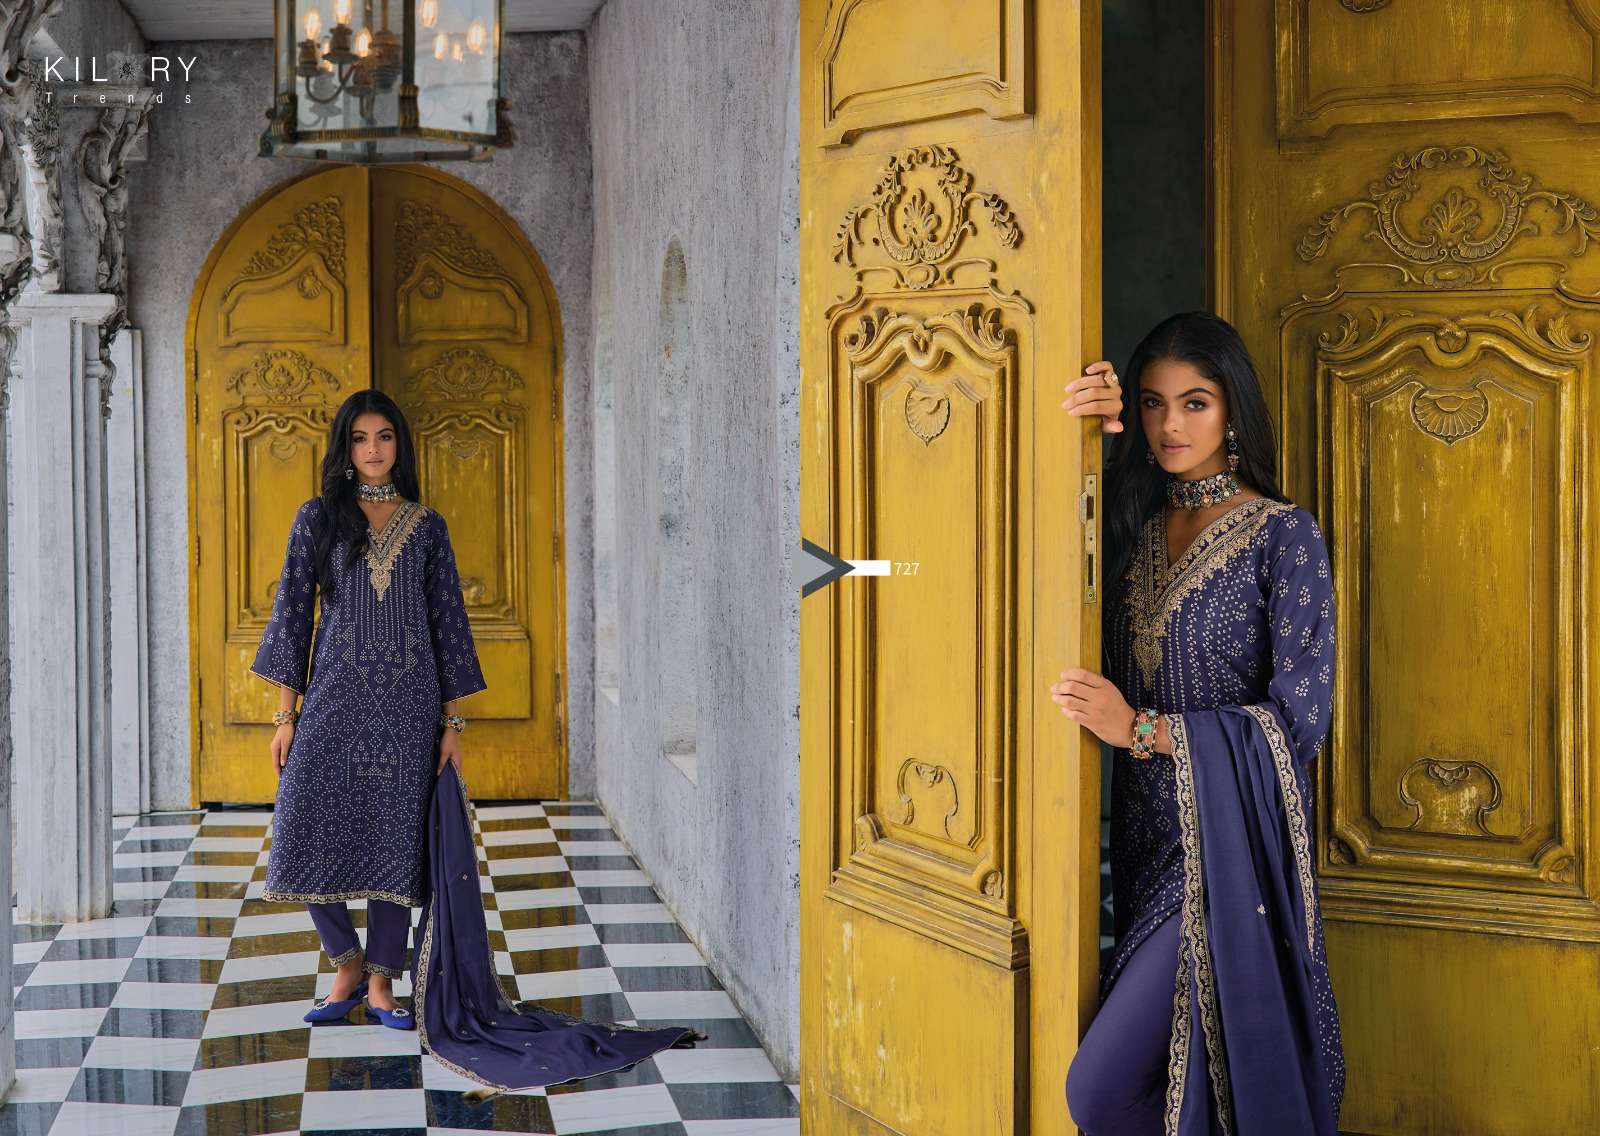 kilory silk of bandhej vol-2 721-728 series designer partywear salwar kameez wholesaler surat gujarat